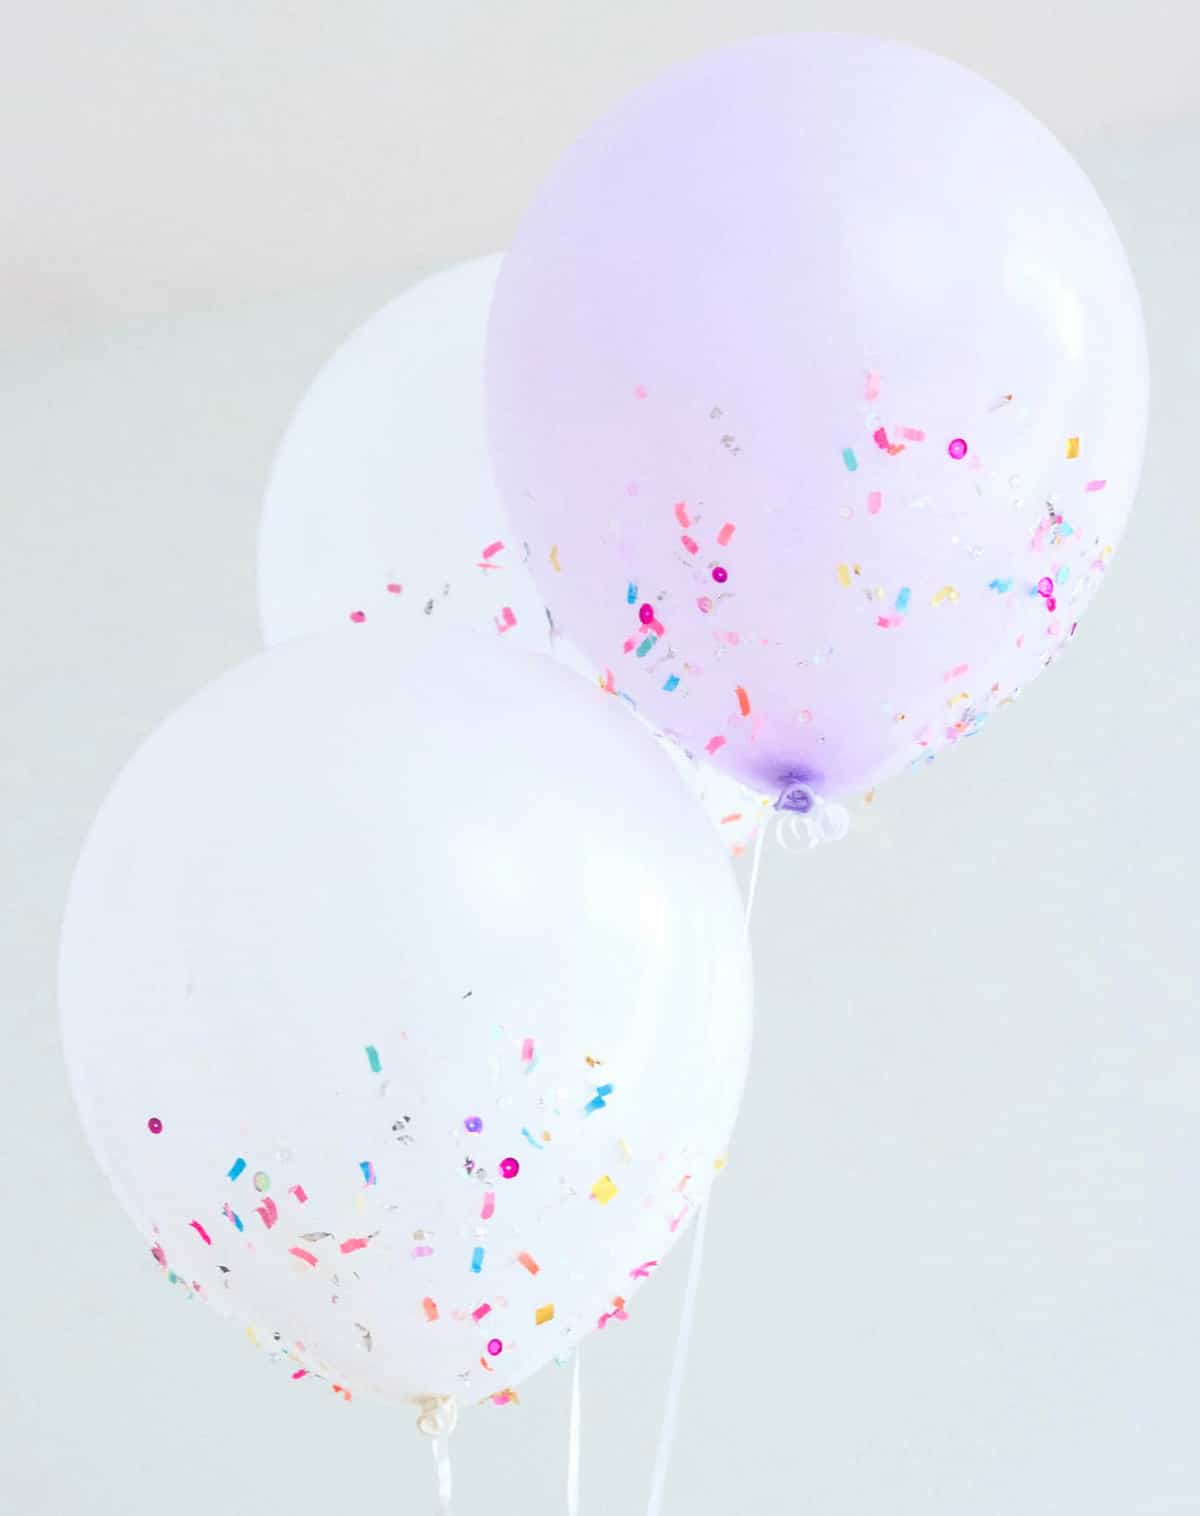 confetti balloons for colorful celebration